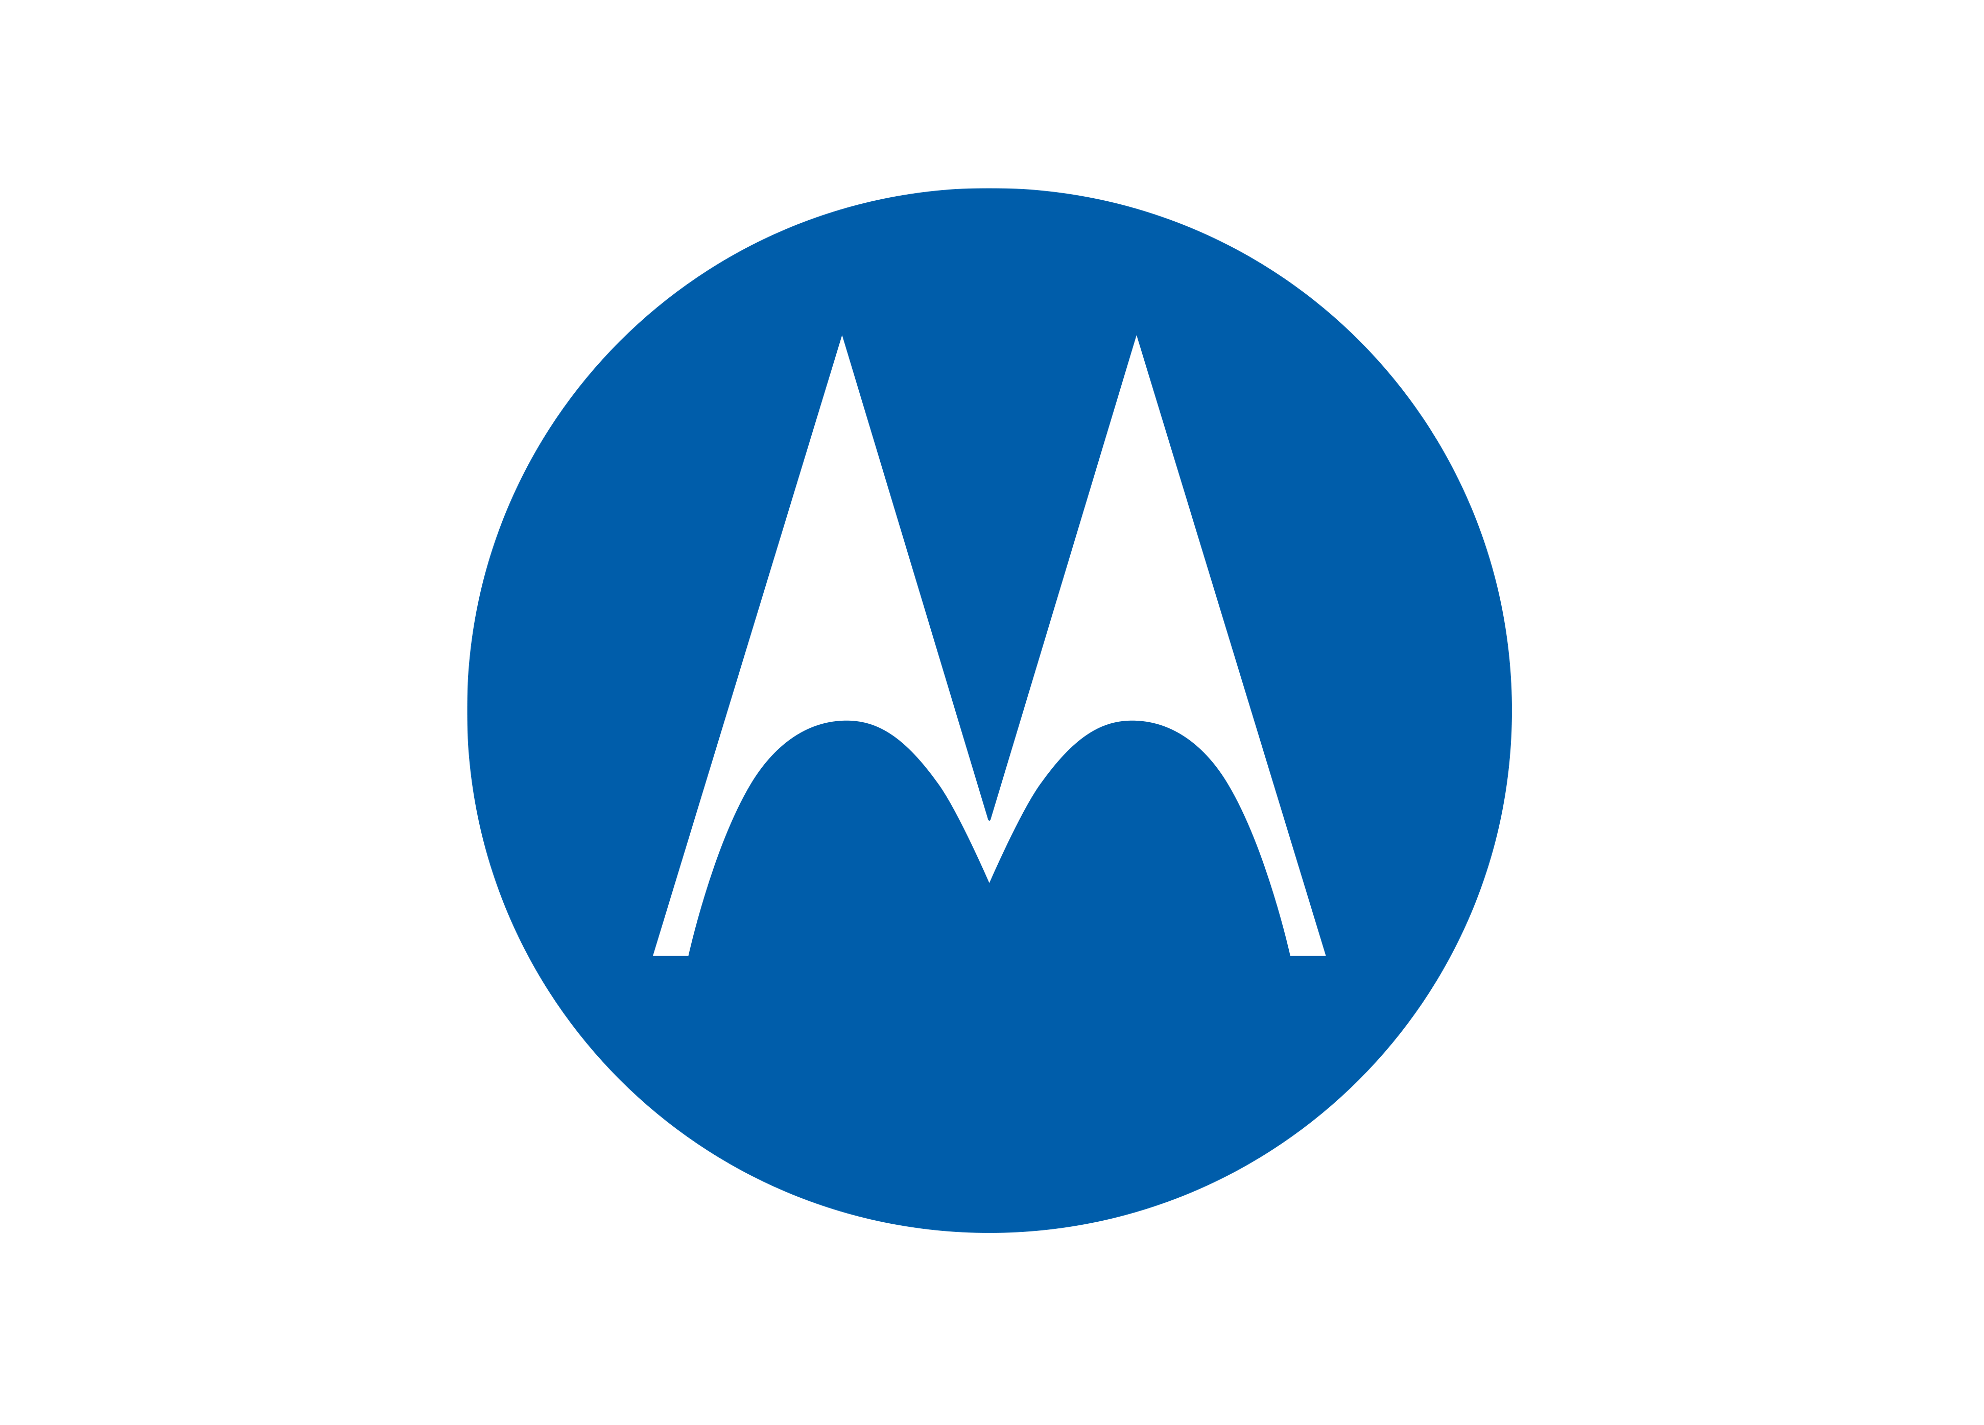 Motorola Licensed Under MPEG-2 License